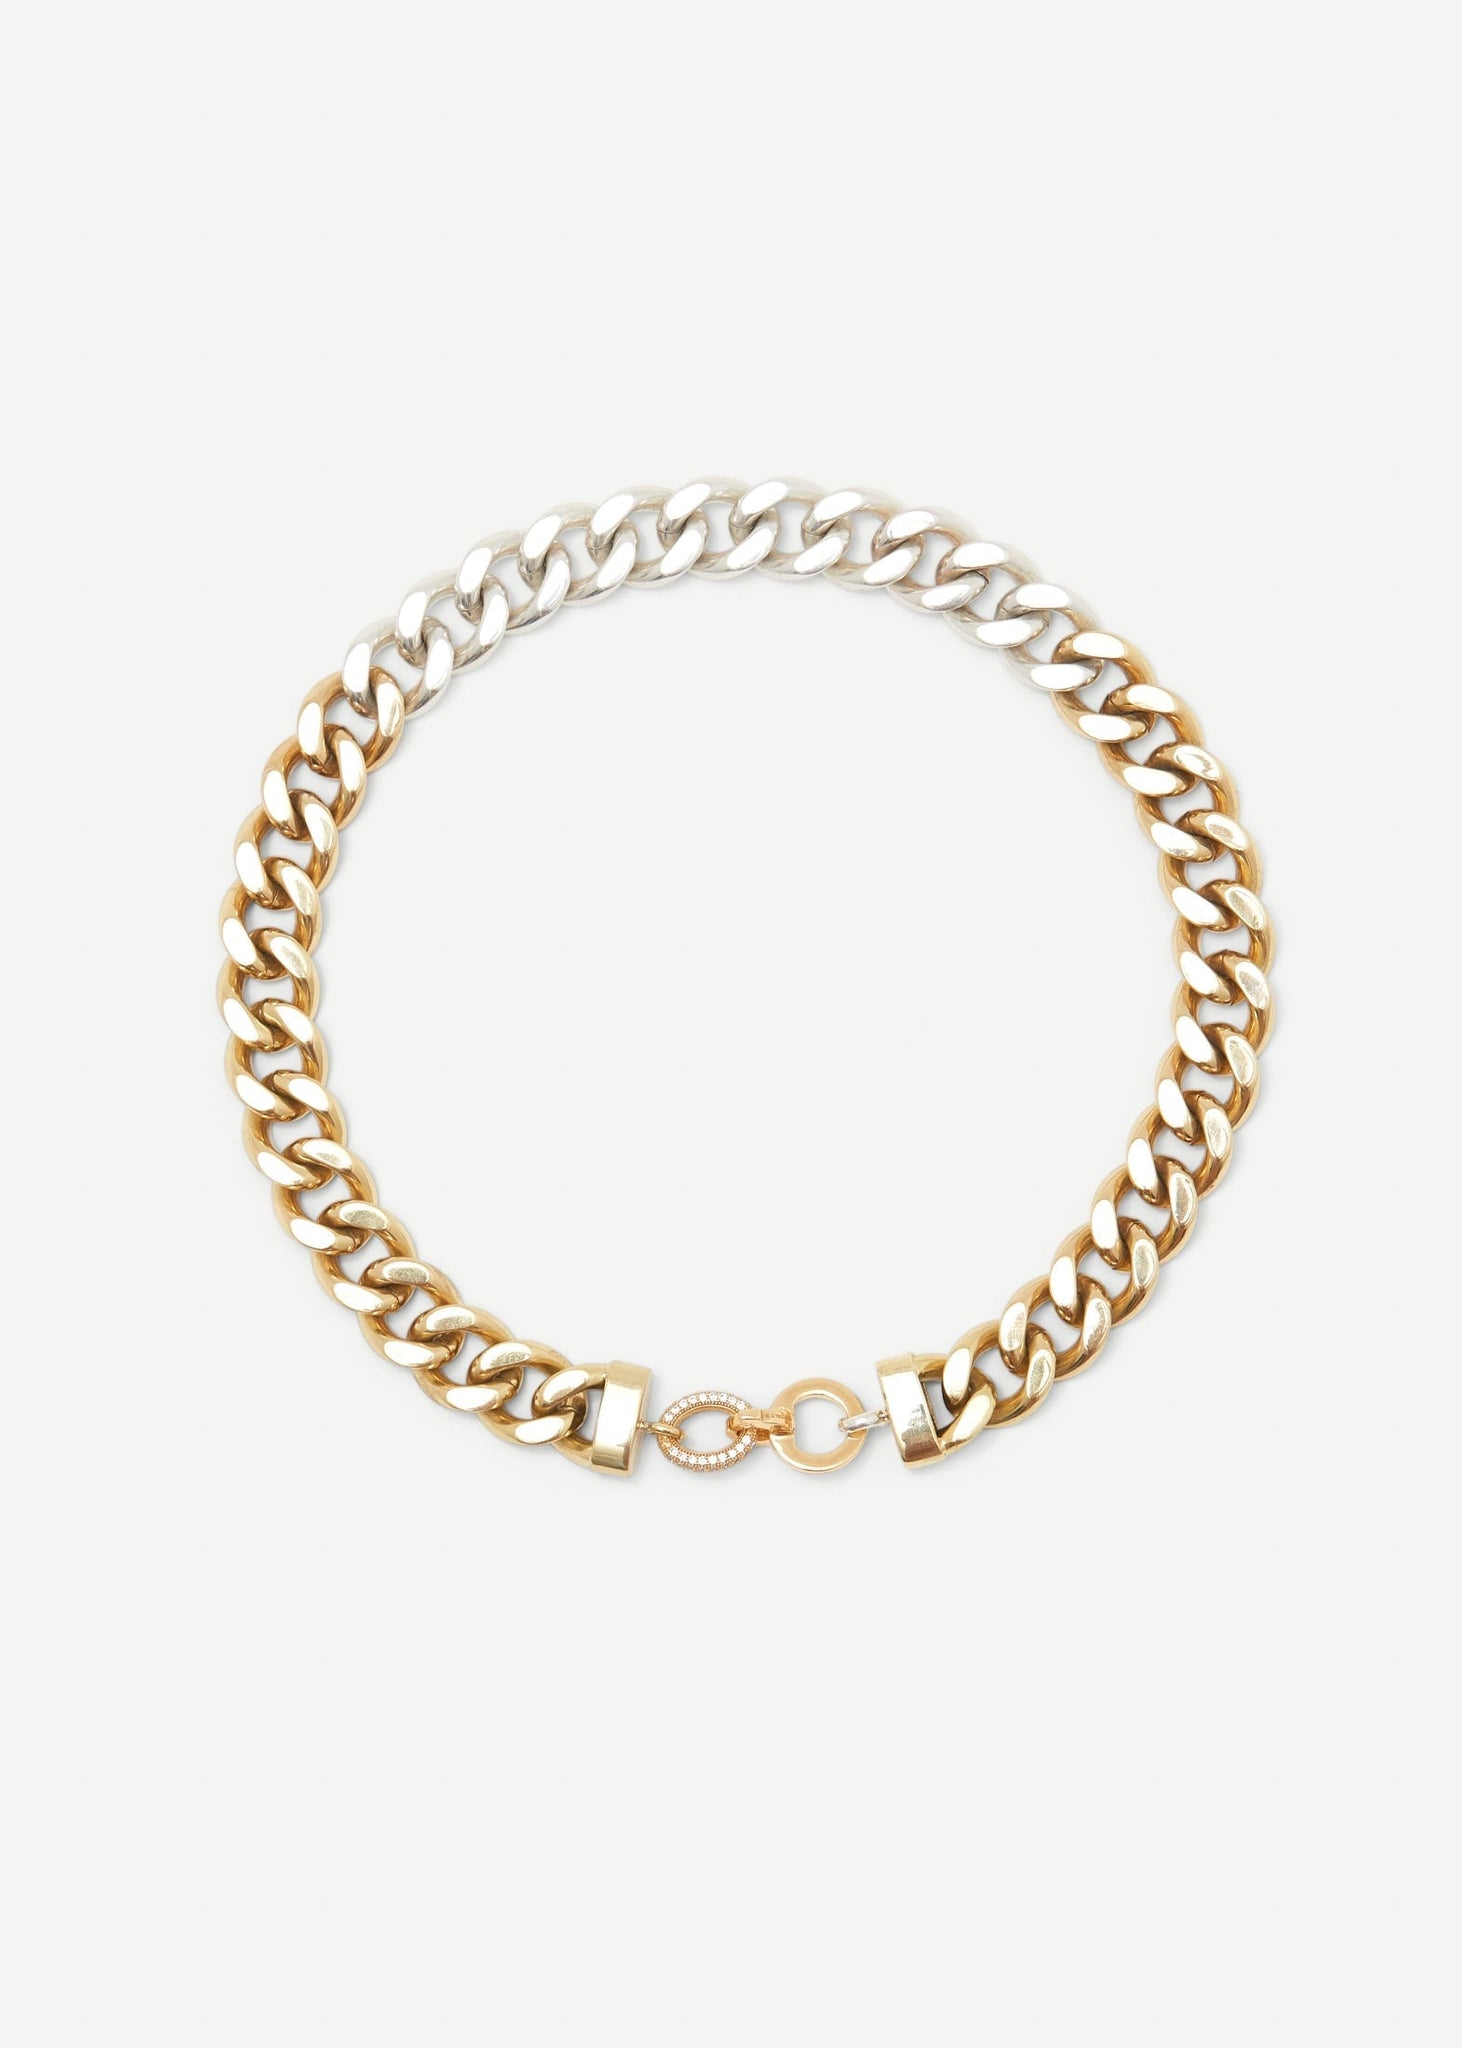 Molded Chain Necklace Maxi - Necklaces - Cornelia Webb - 1